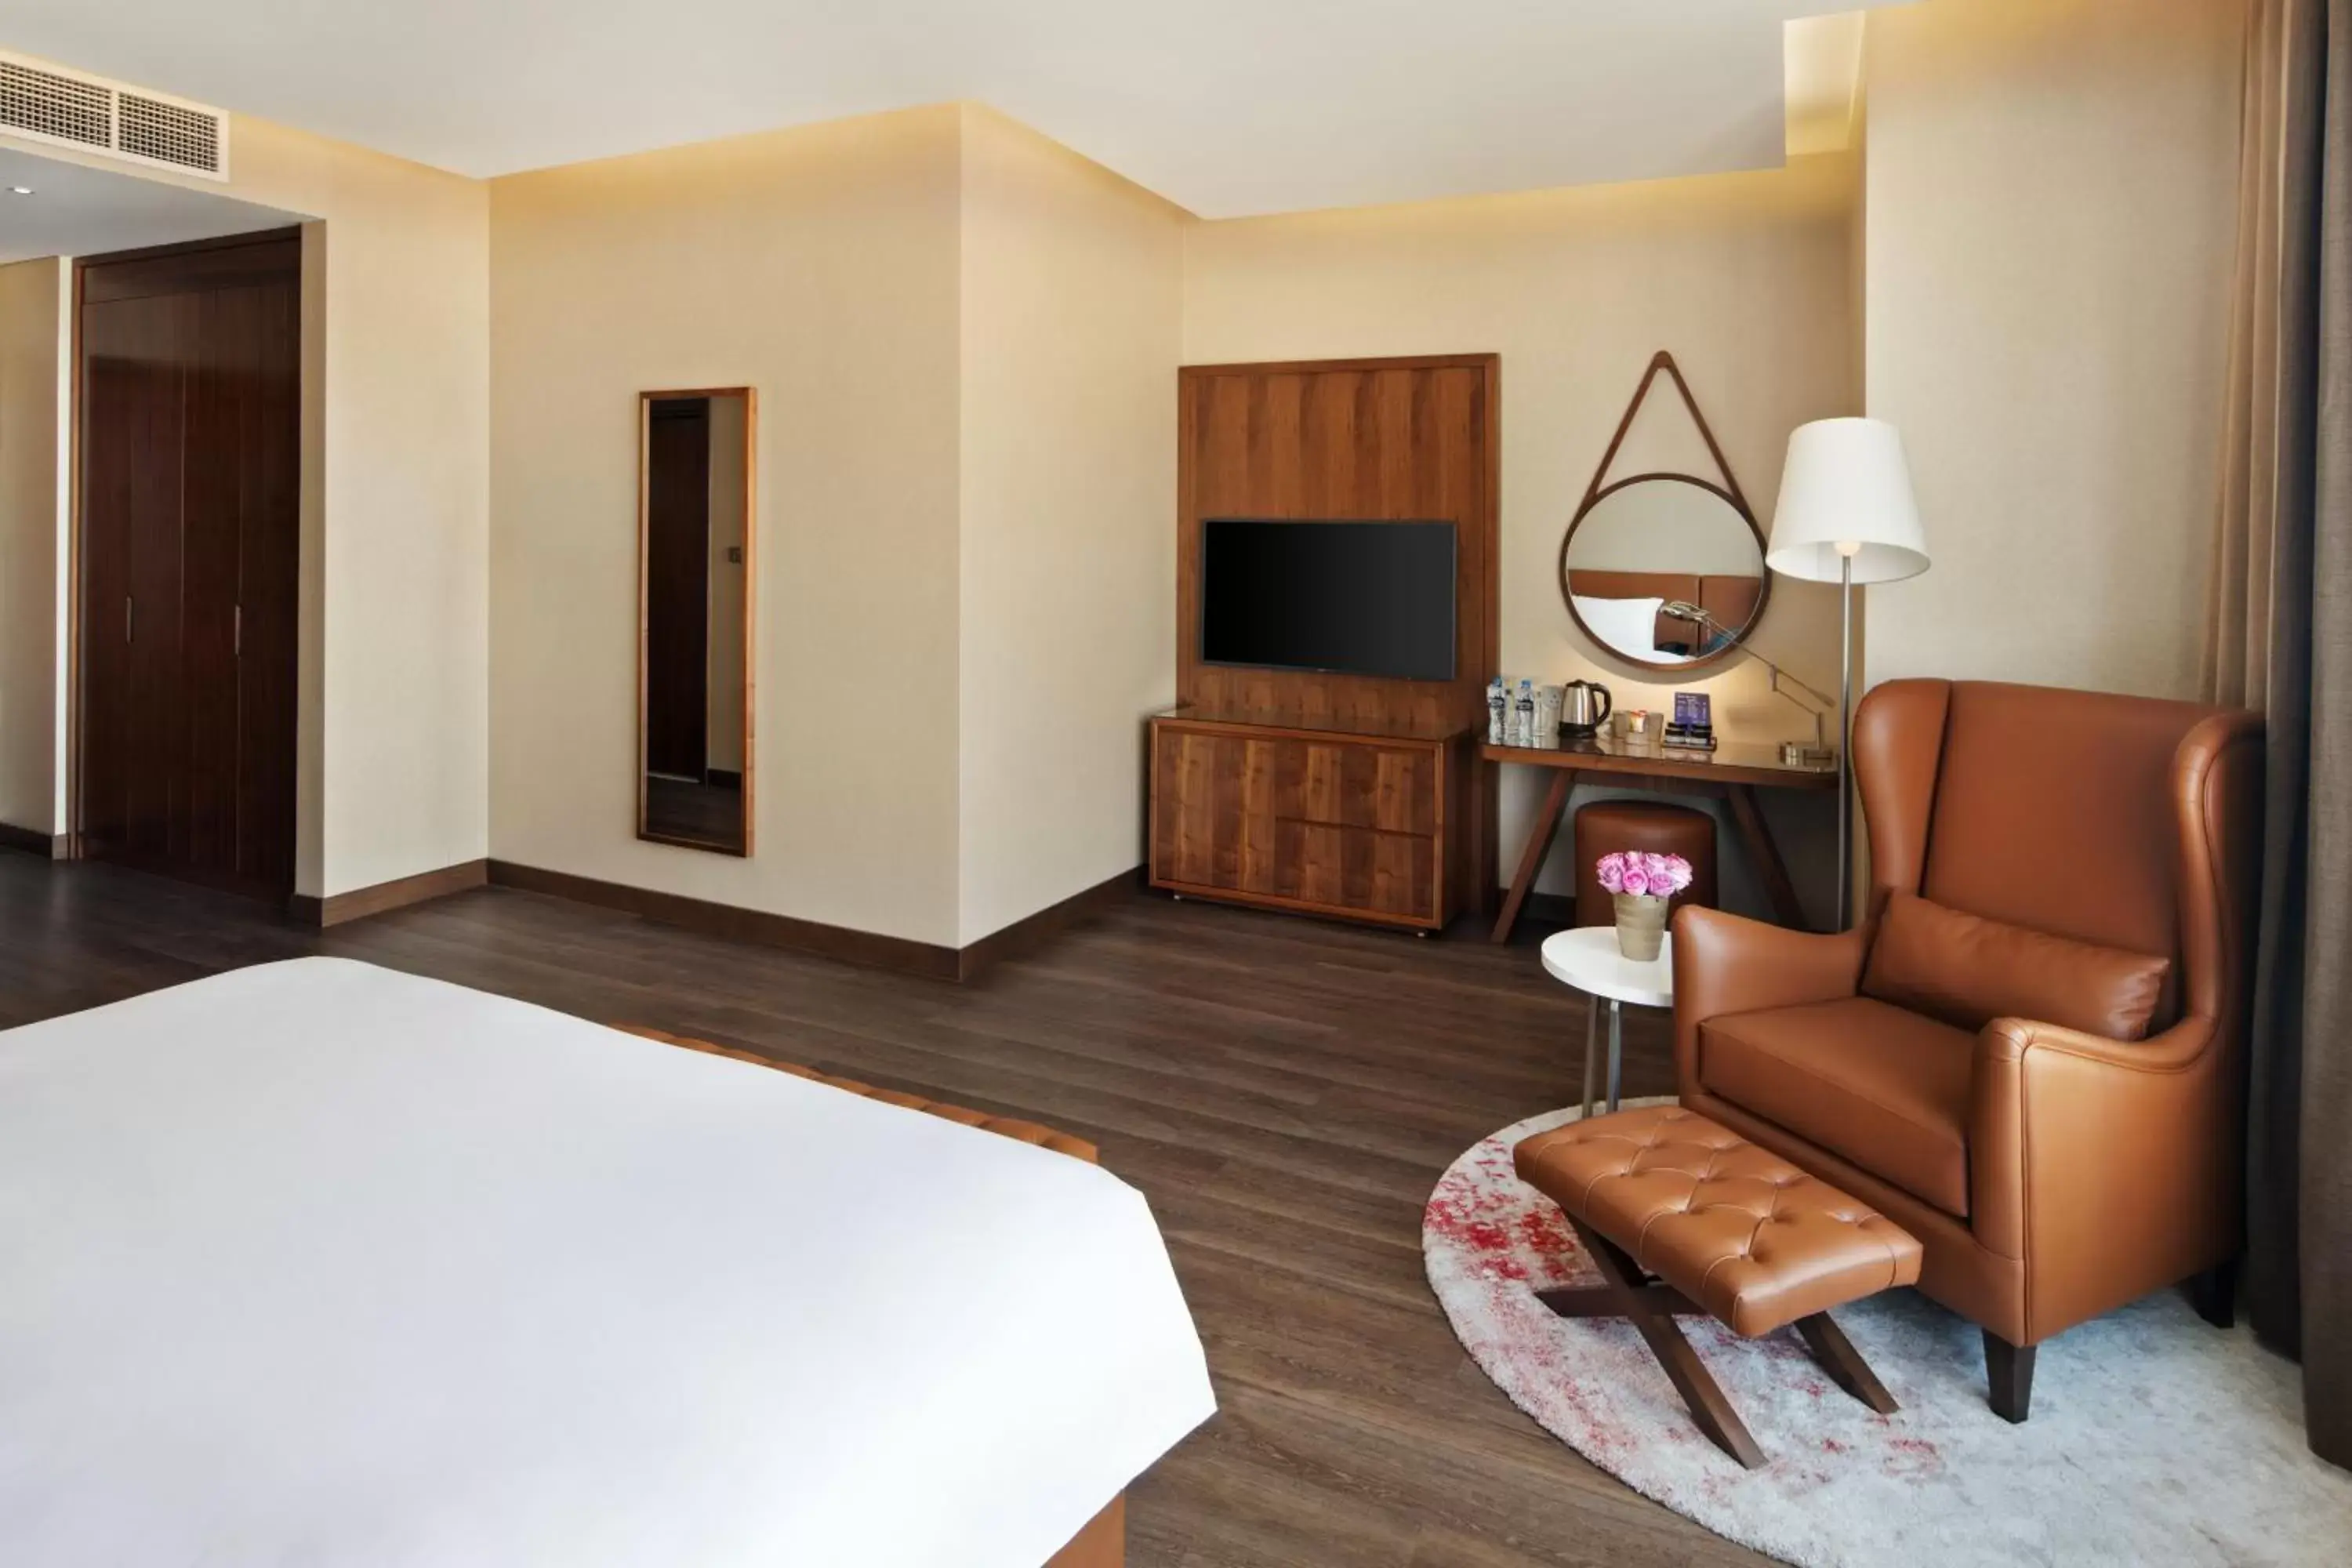 TV and multimedia, Seating Area in Radisson Blu Hotel, Dubai Canal View